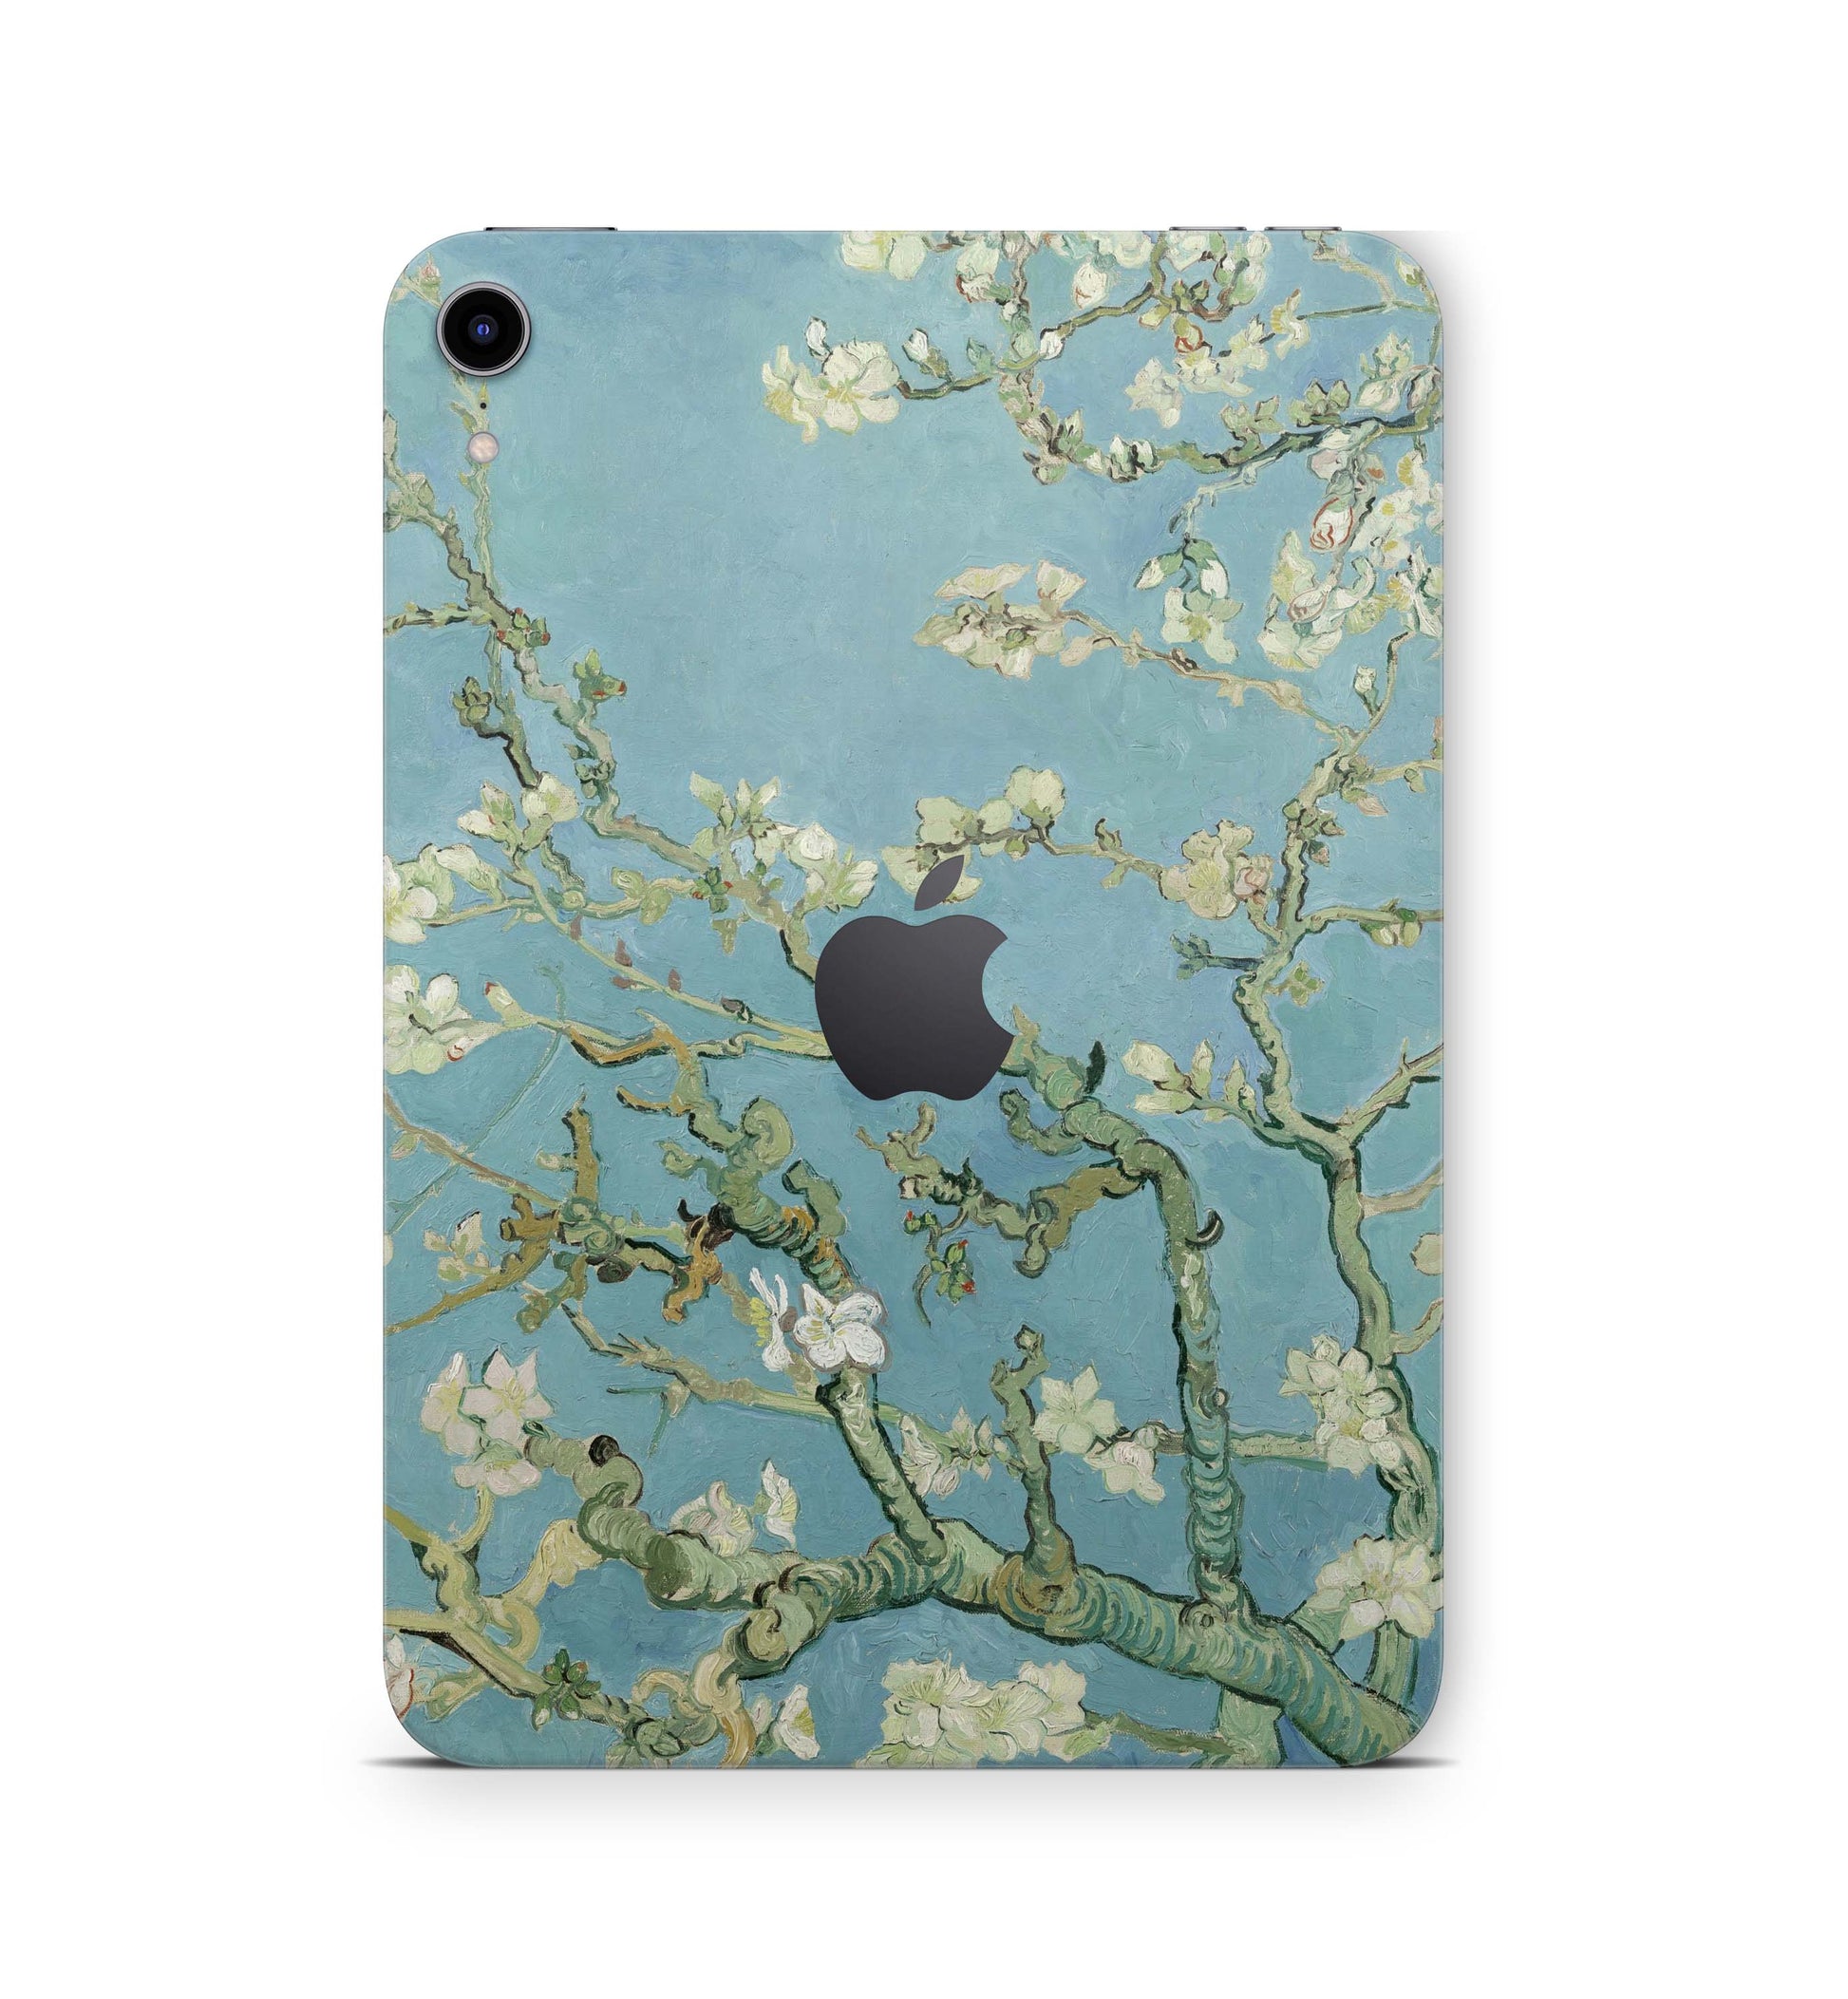 iPad Air Skin Design Cover Folie Vinyl Skins & Wraps für alle iPad Air Modelle Aufkleber Skins4u Blossoming  